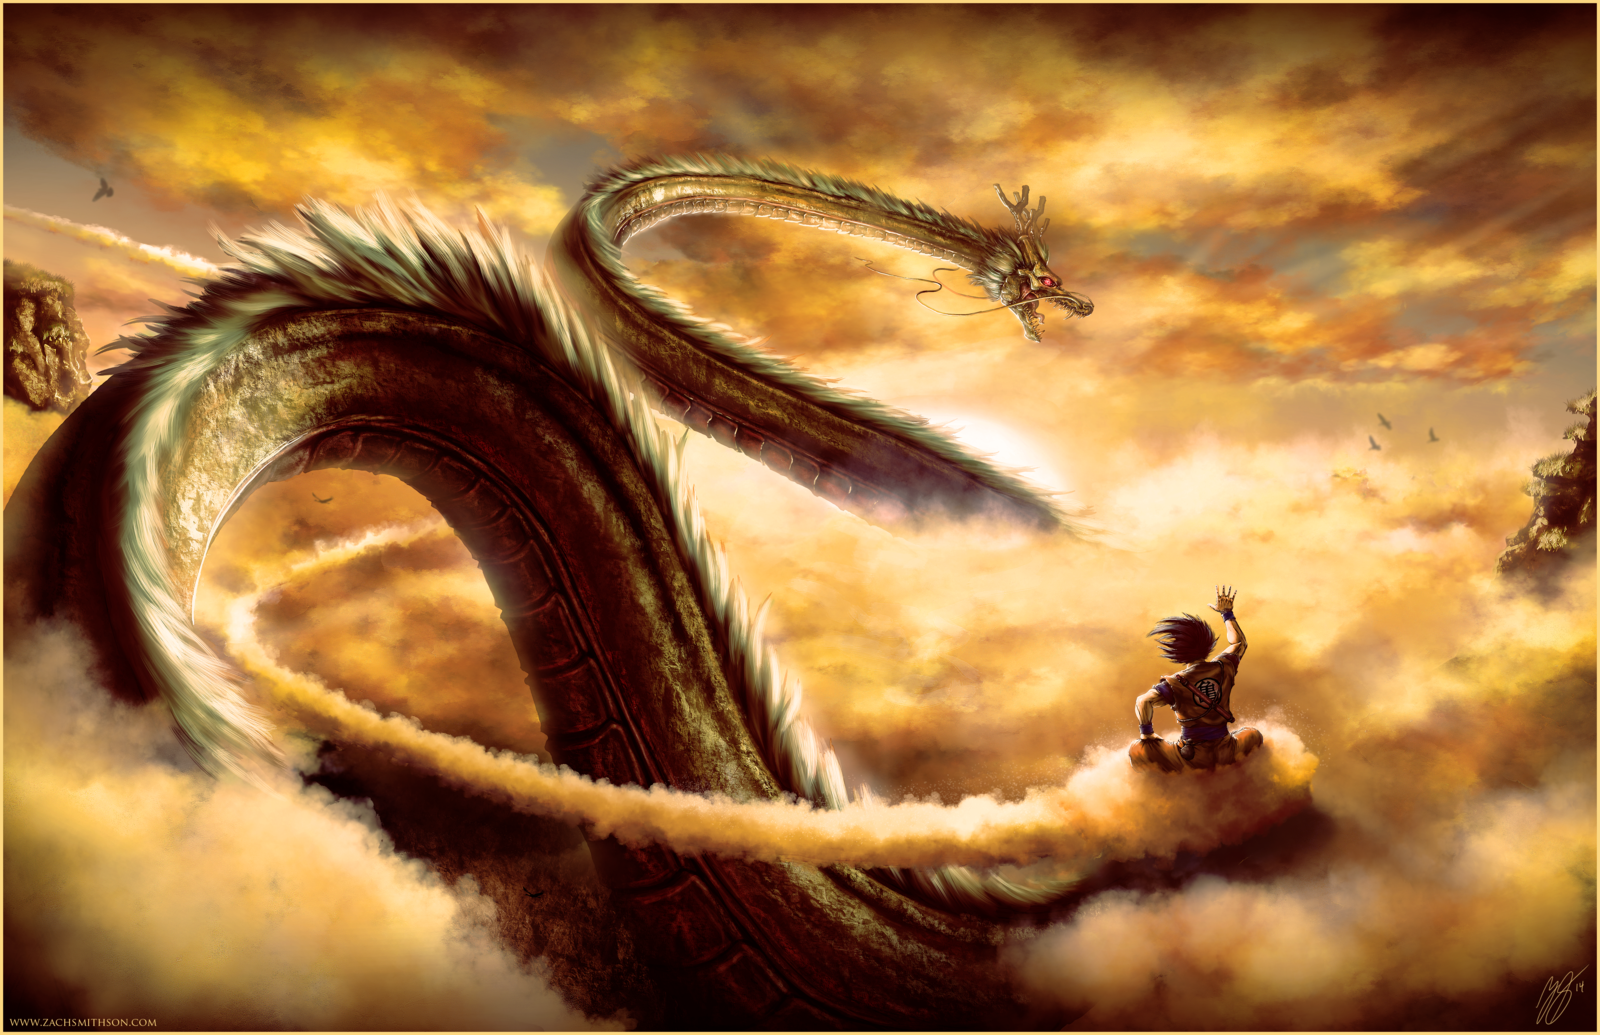 General 1600x1035 Dragon Ball anime dragon creature fantasy art Dragon Ball Z sky artwork